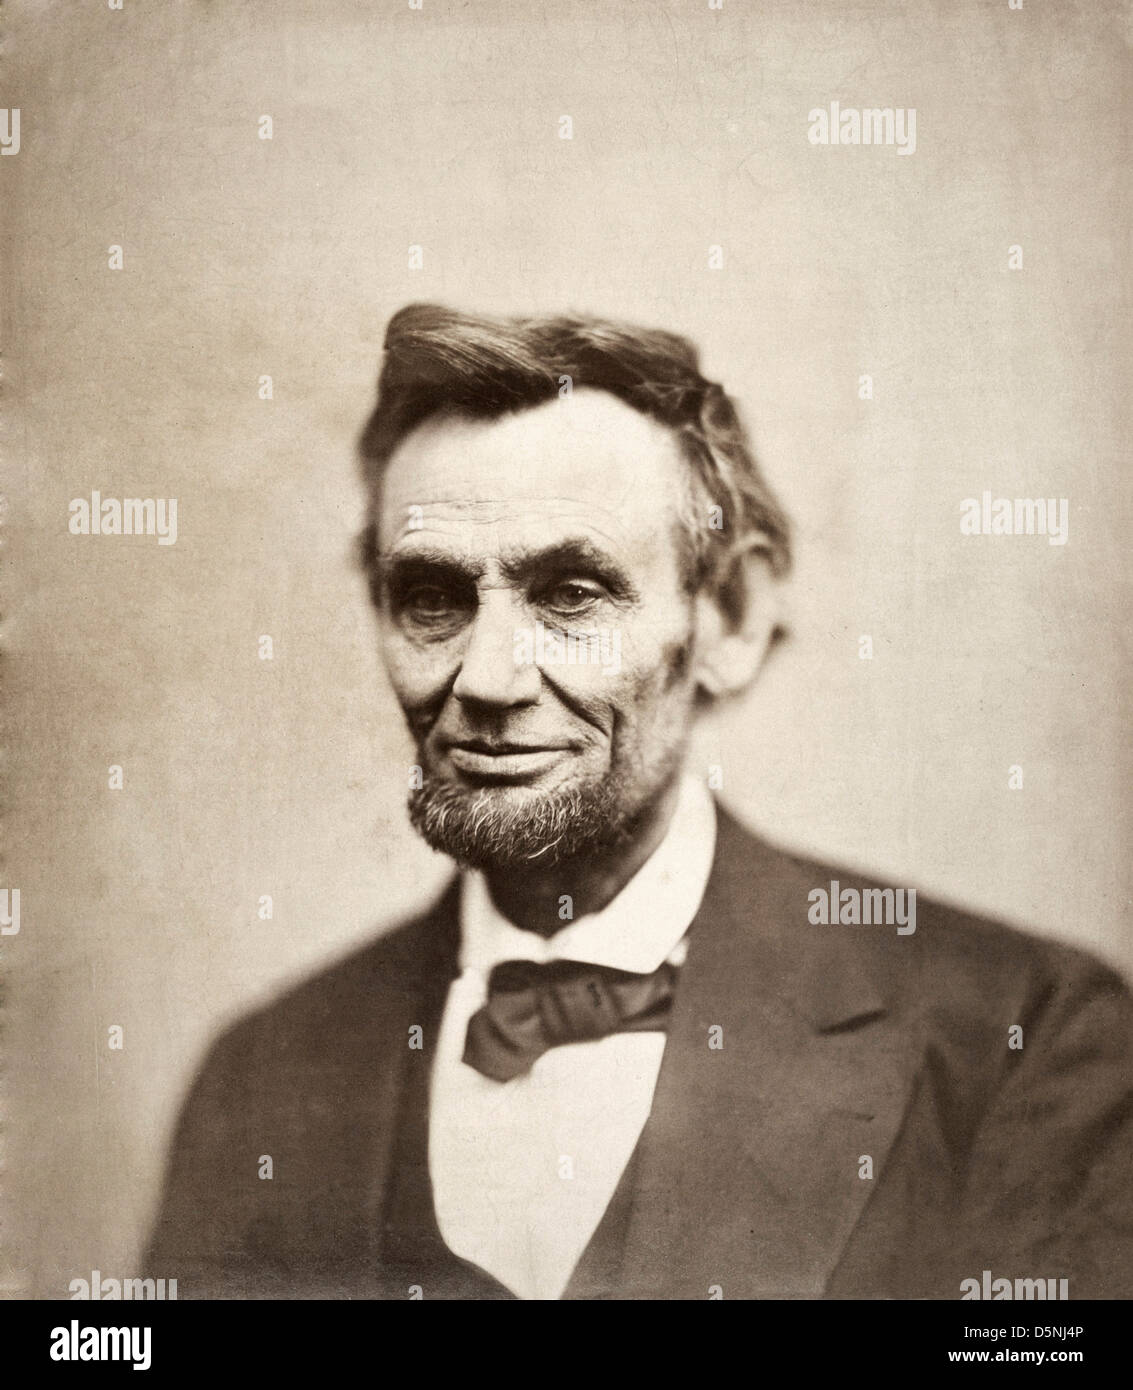 Alexander Gardner, Abraham Lincoln 1865 Photograph. National Portrait Gallery, Smithsonian Institution, Washington, D.C. Stock Photo